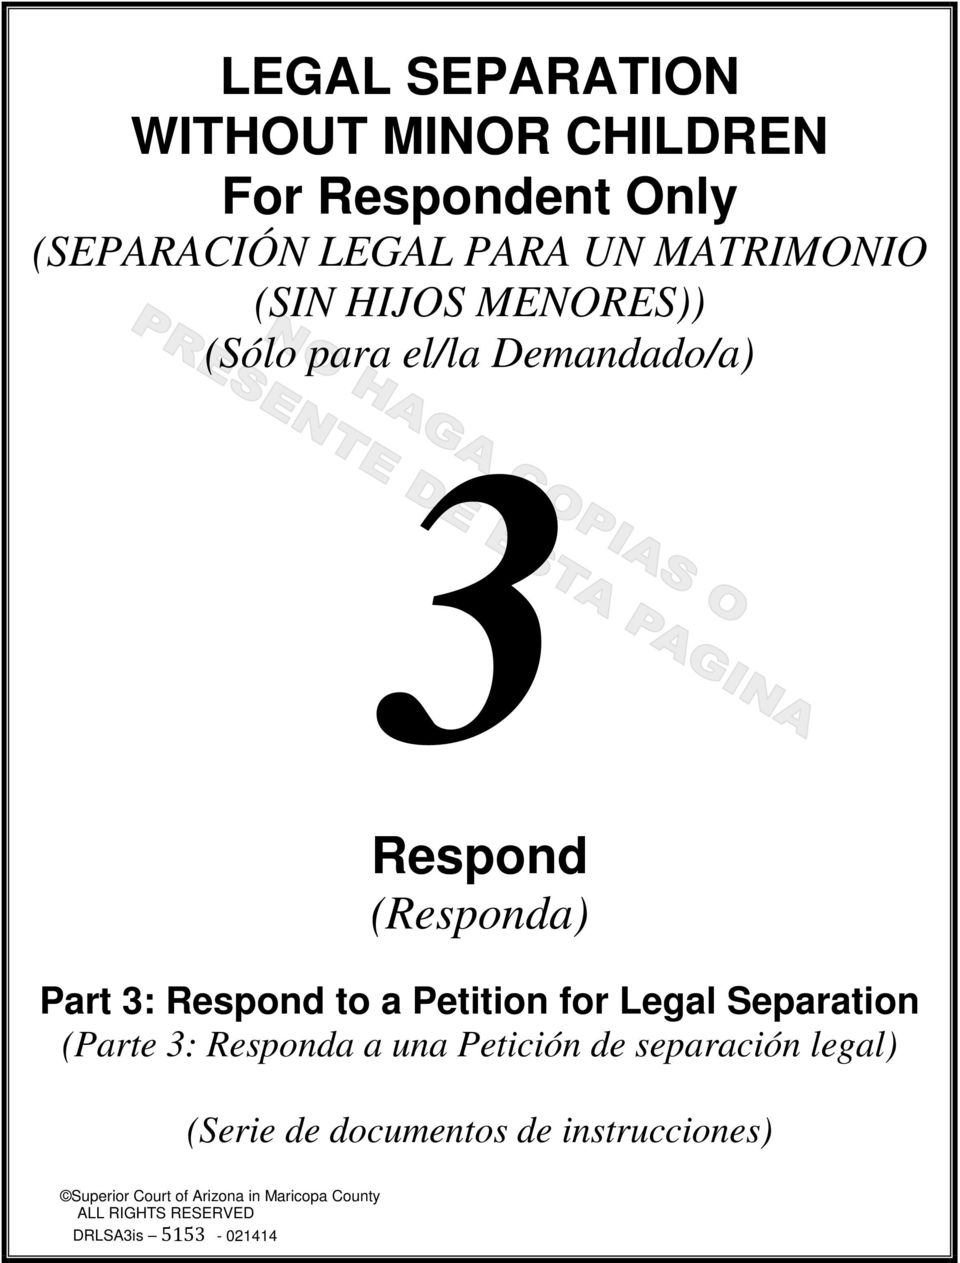 Respond to a Petition for Legal Separation (Parte 3: Responda a una Petición de separación